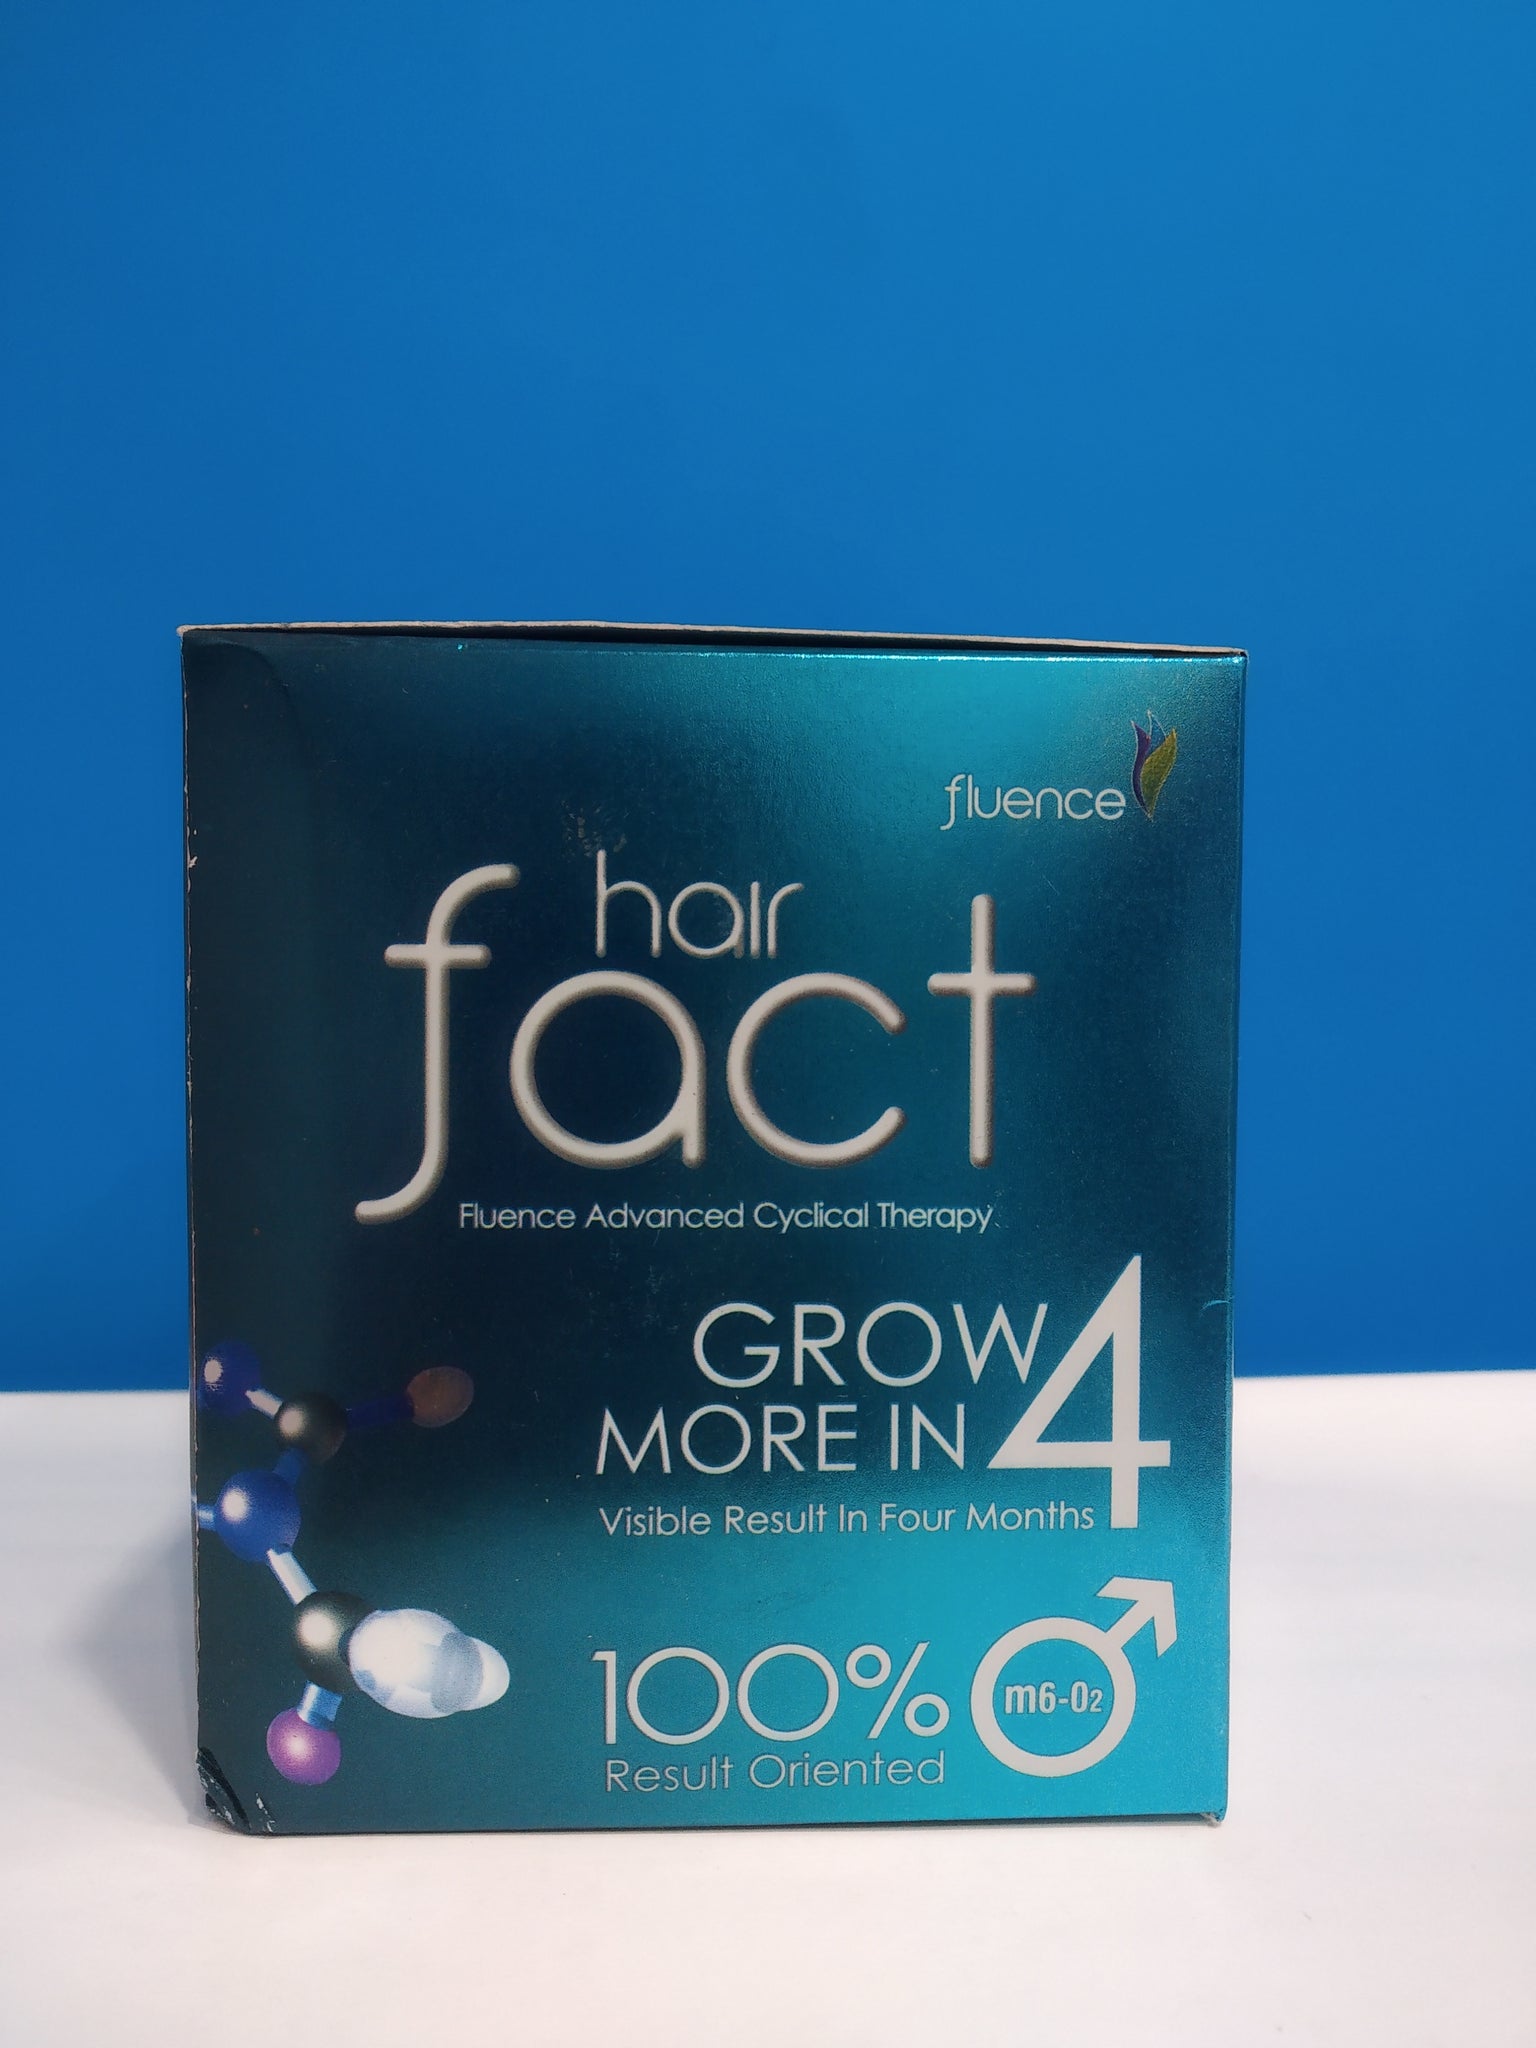 Hair fact kit | Hair Growth | Fluence Hair Fact kit | Morr f 10 | Morr f 5| Hair  Fact review - YouTube